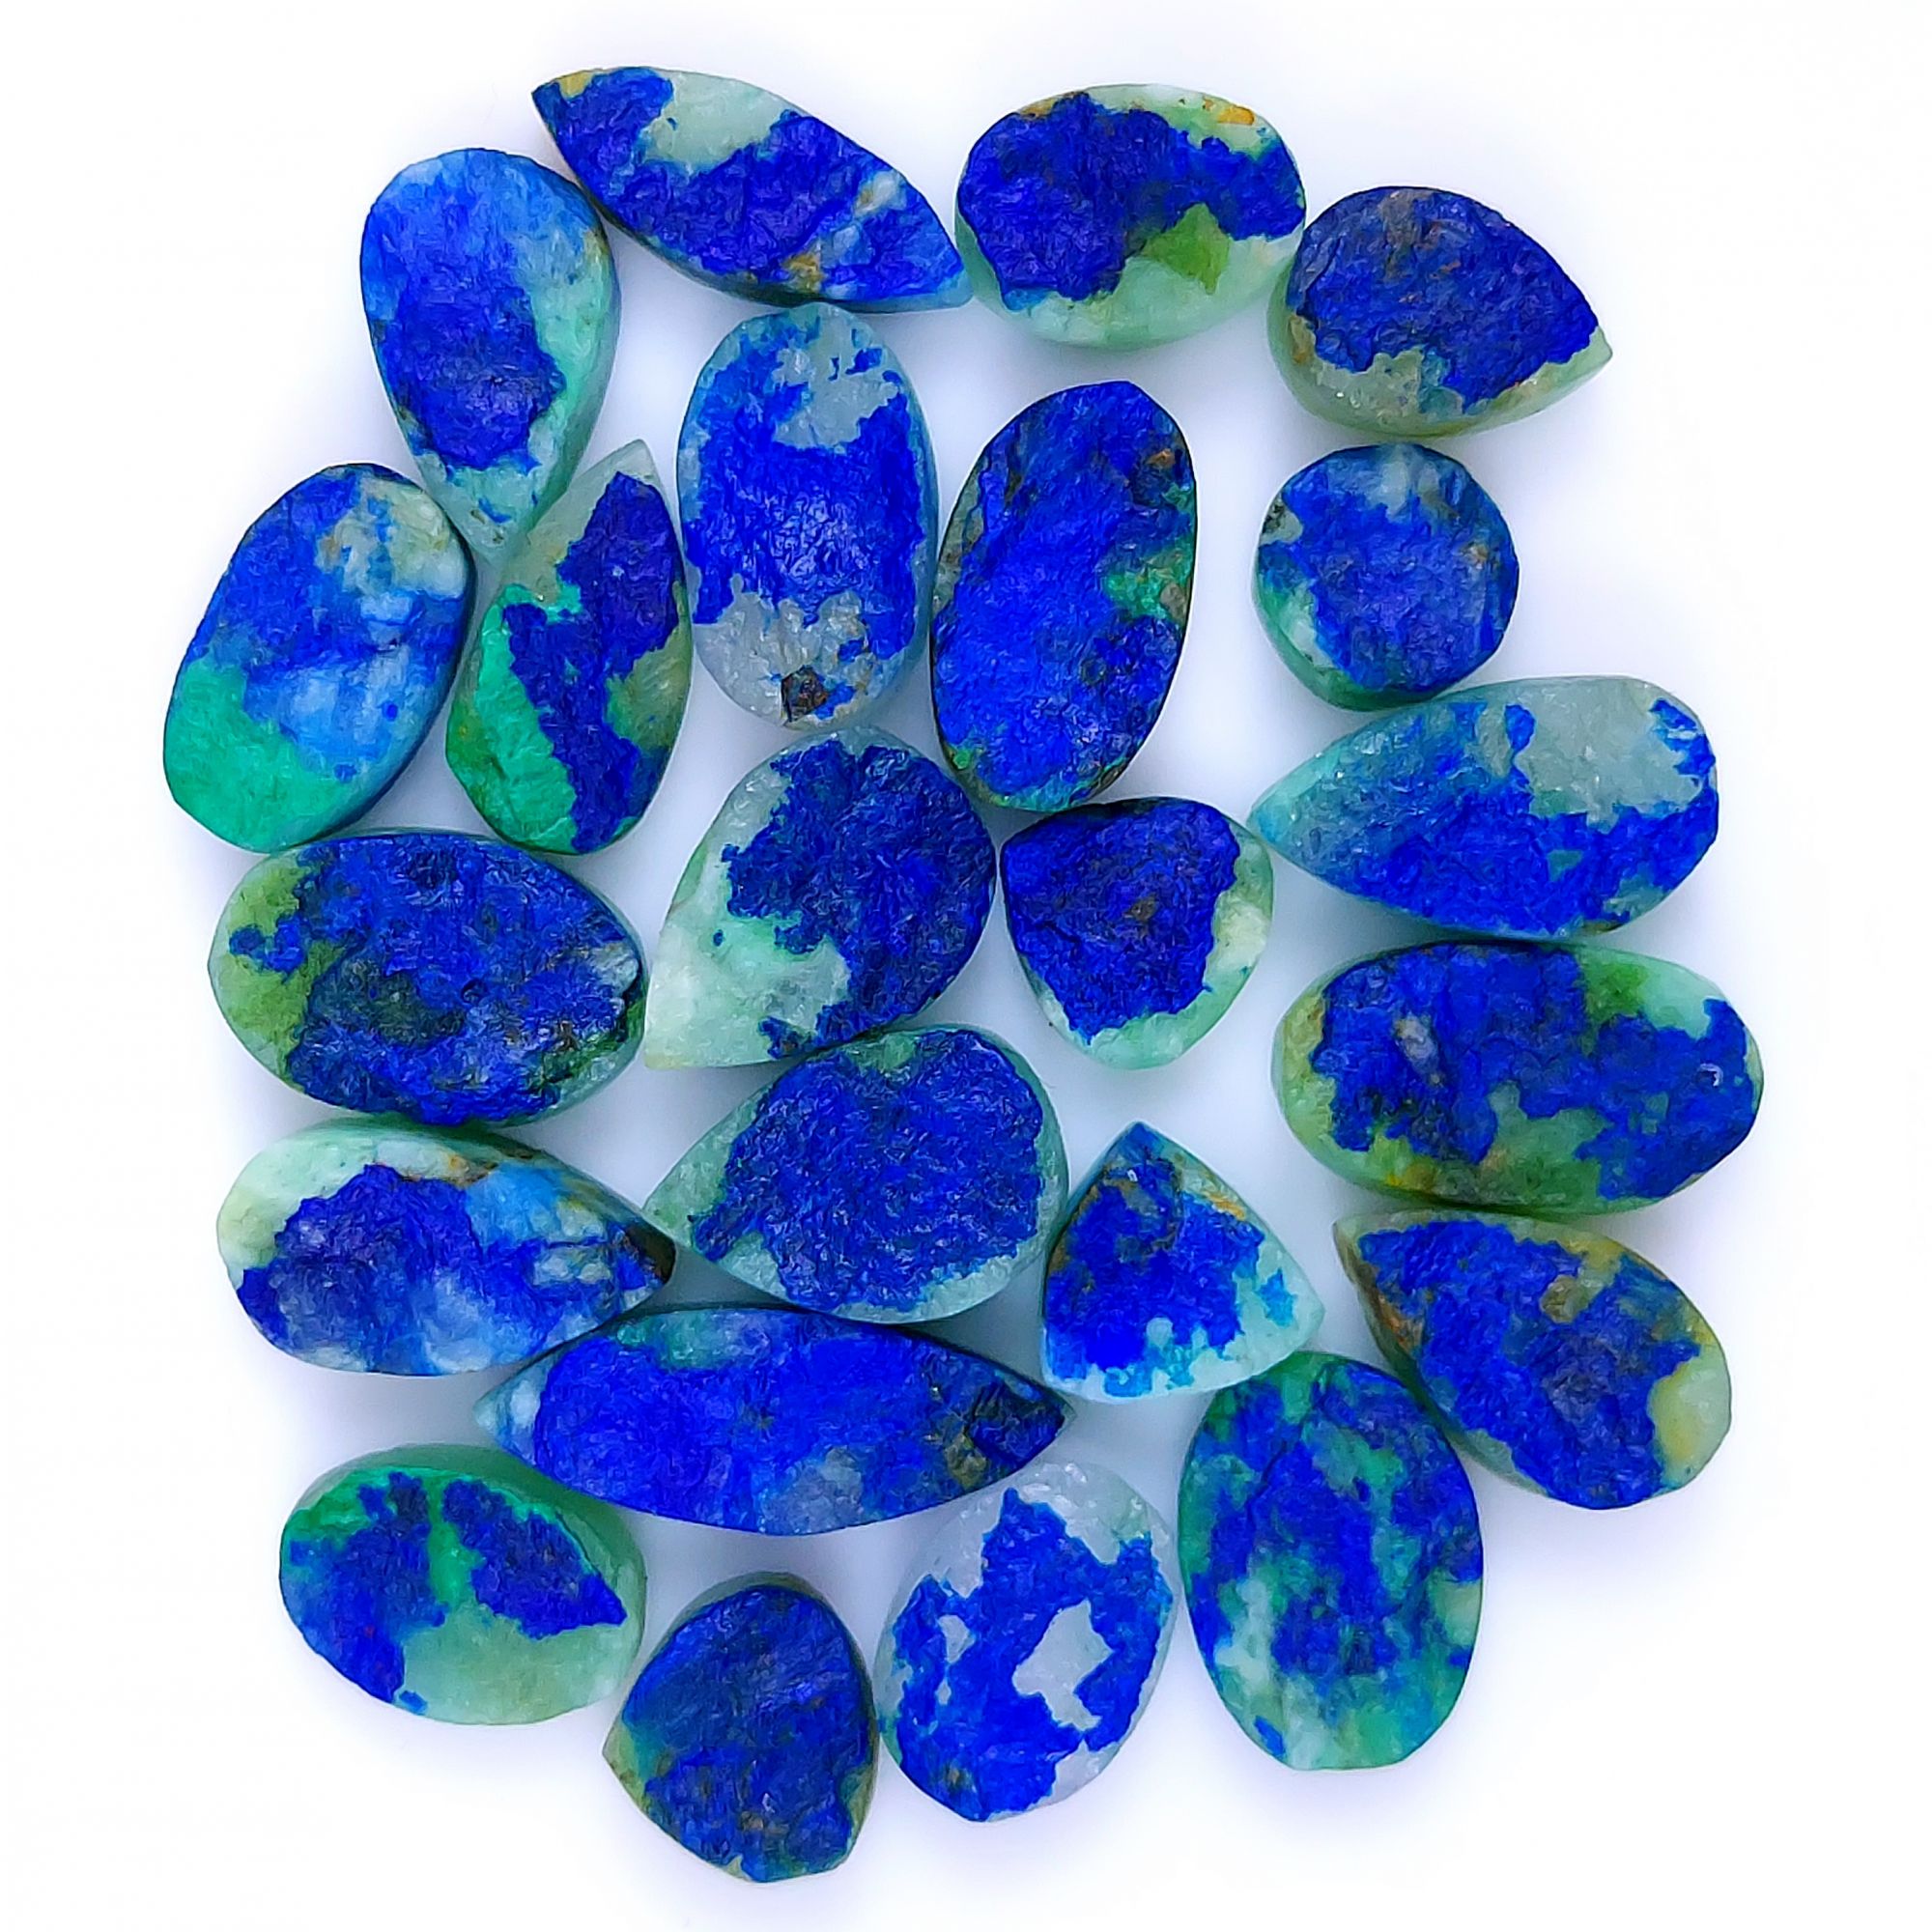 23 Pcs Pcs137Cts Natural Blue Azurite Druzy Gemstone Cabochon Lot20x10 10x10mm#1000